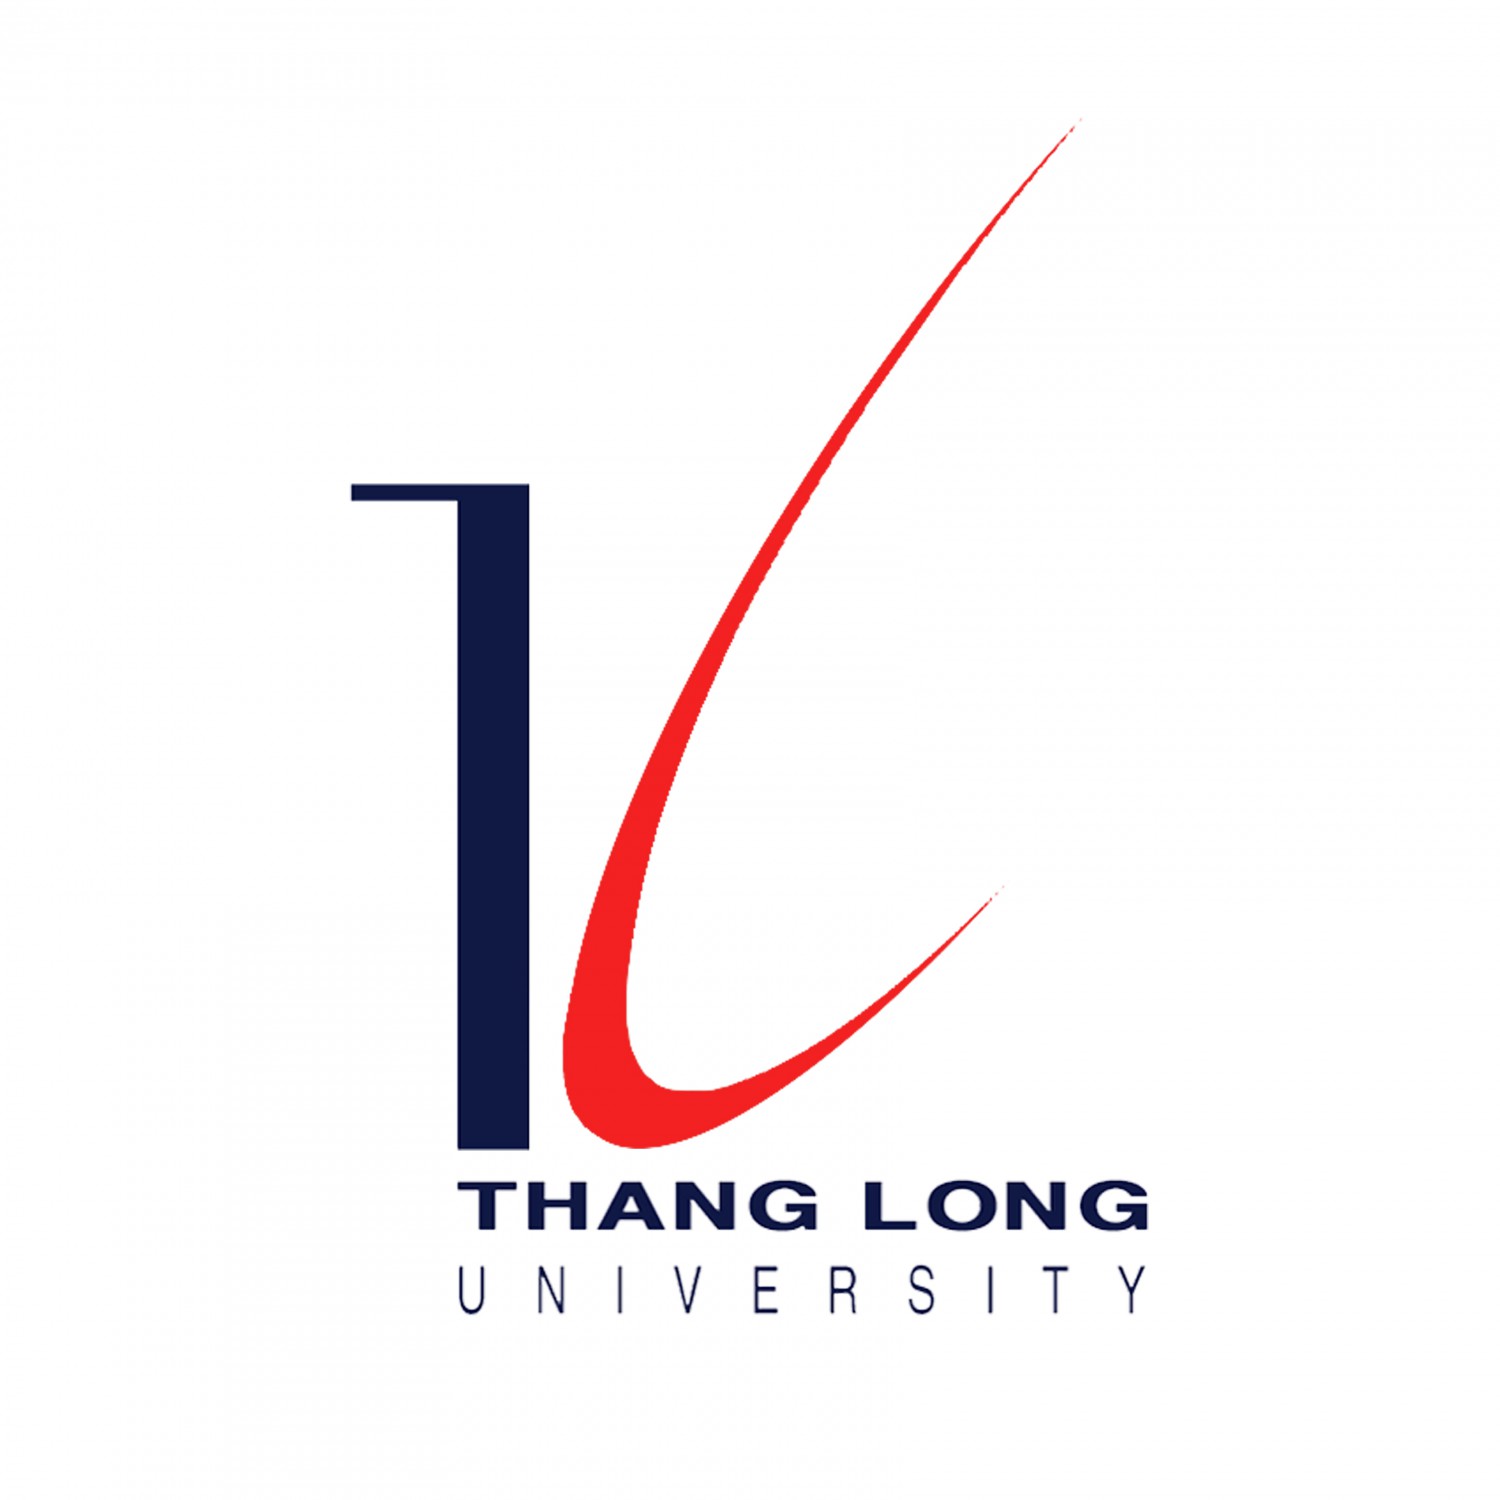 TLU logo